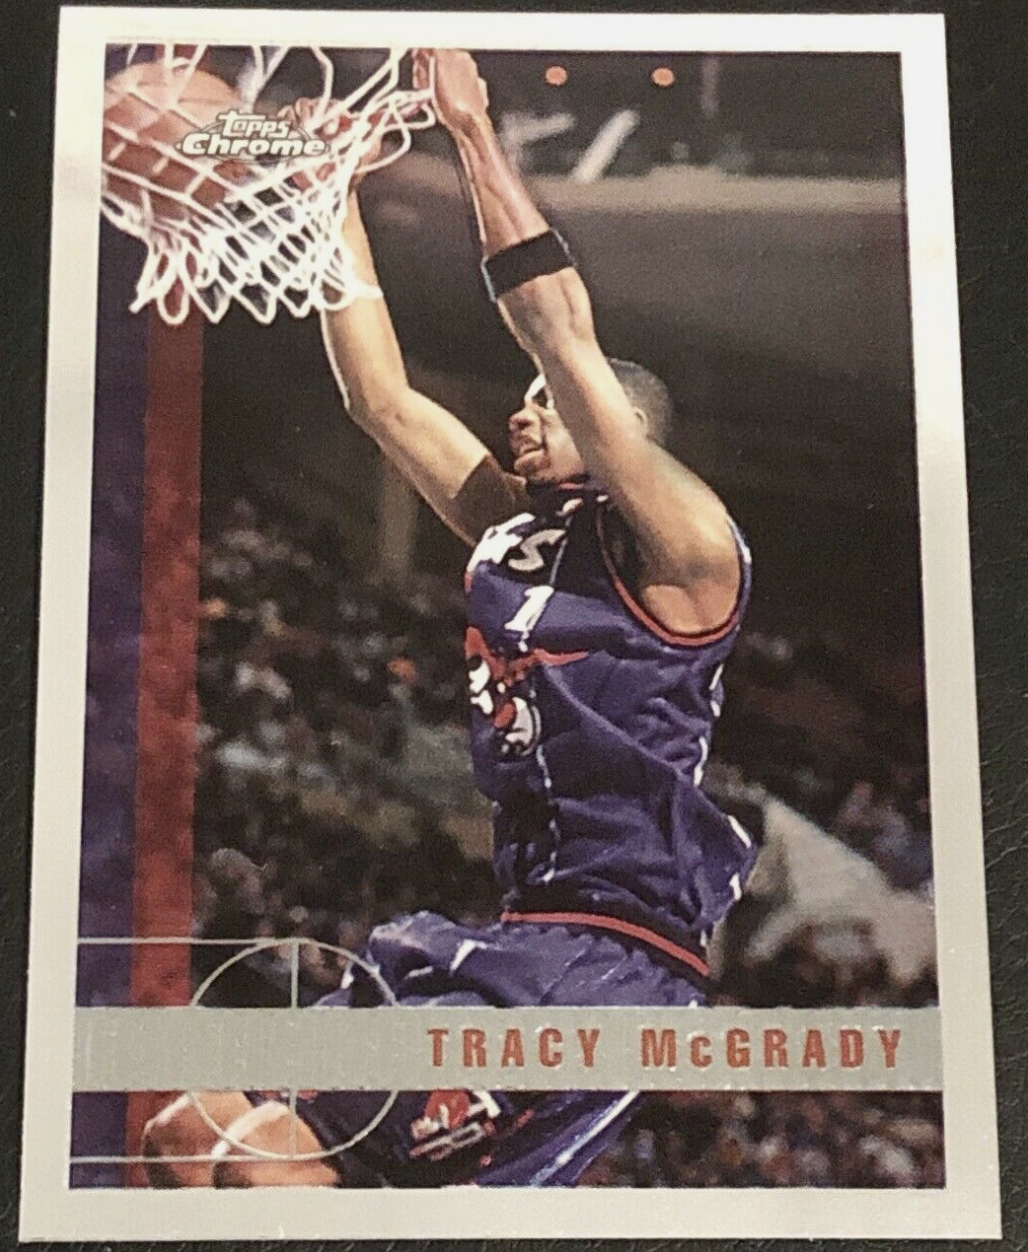 1997 Topps Chrome Tracy McGrady Rookie Card #125